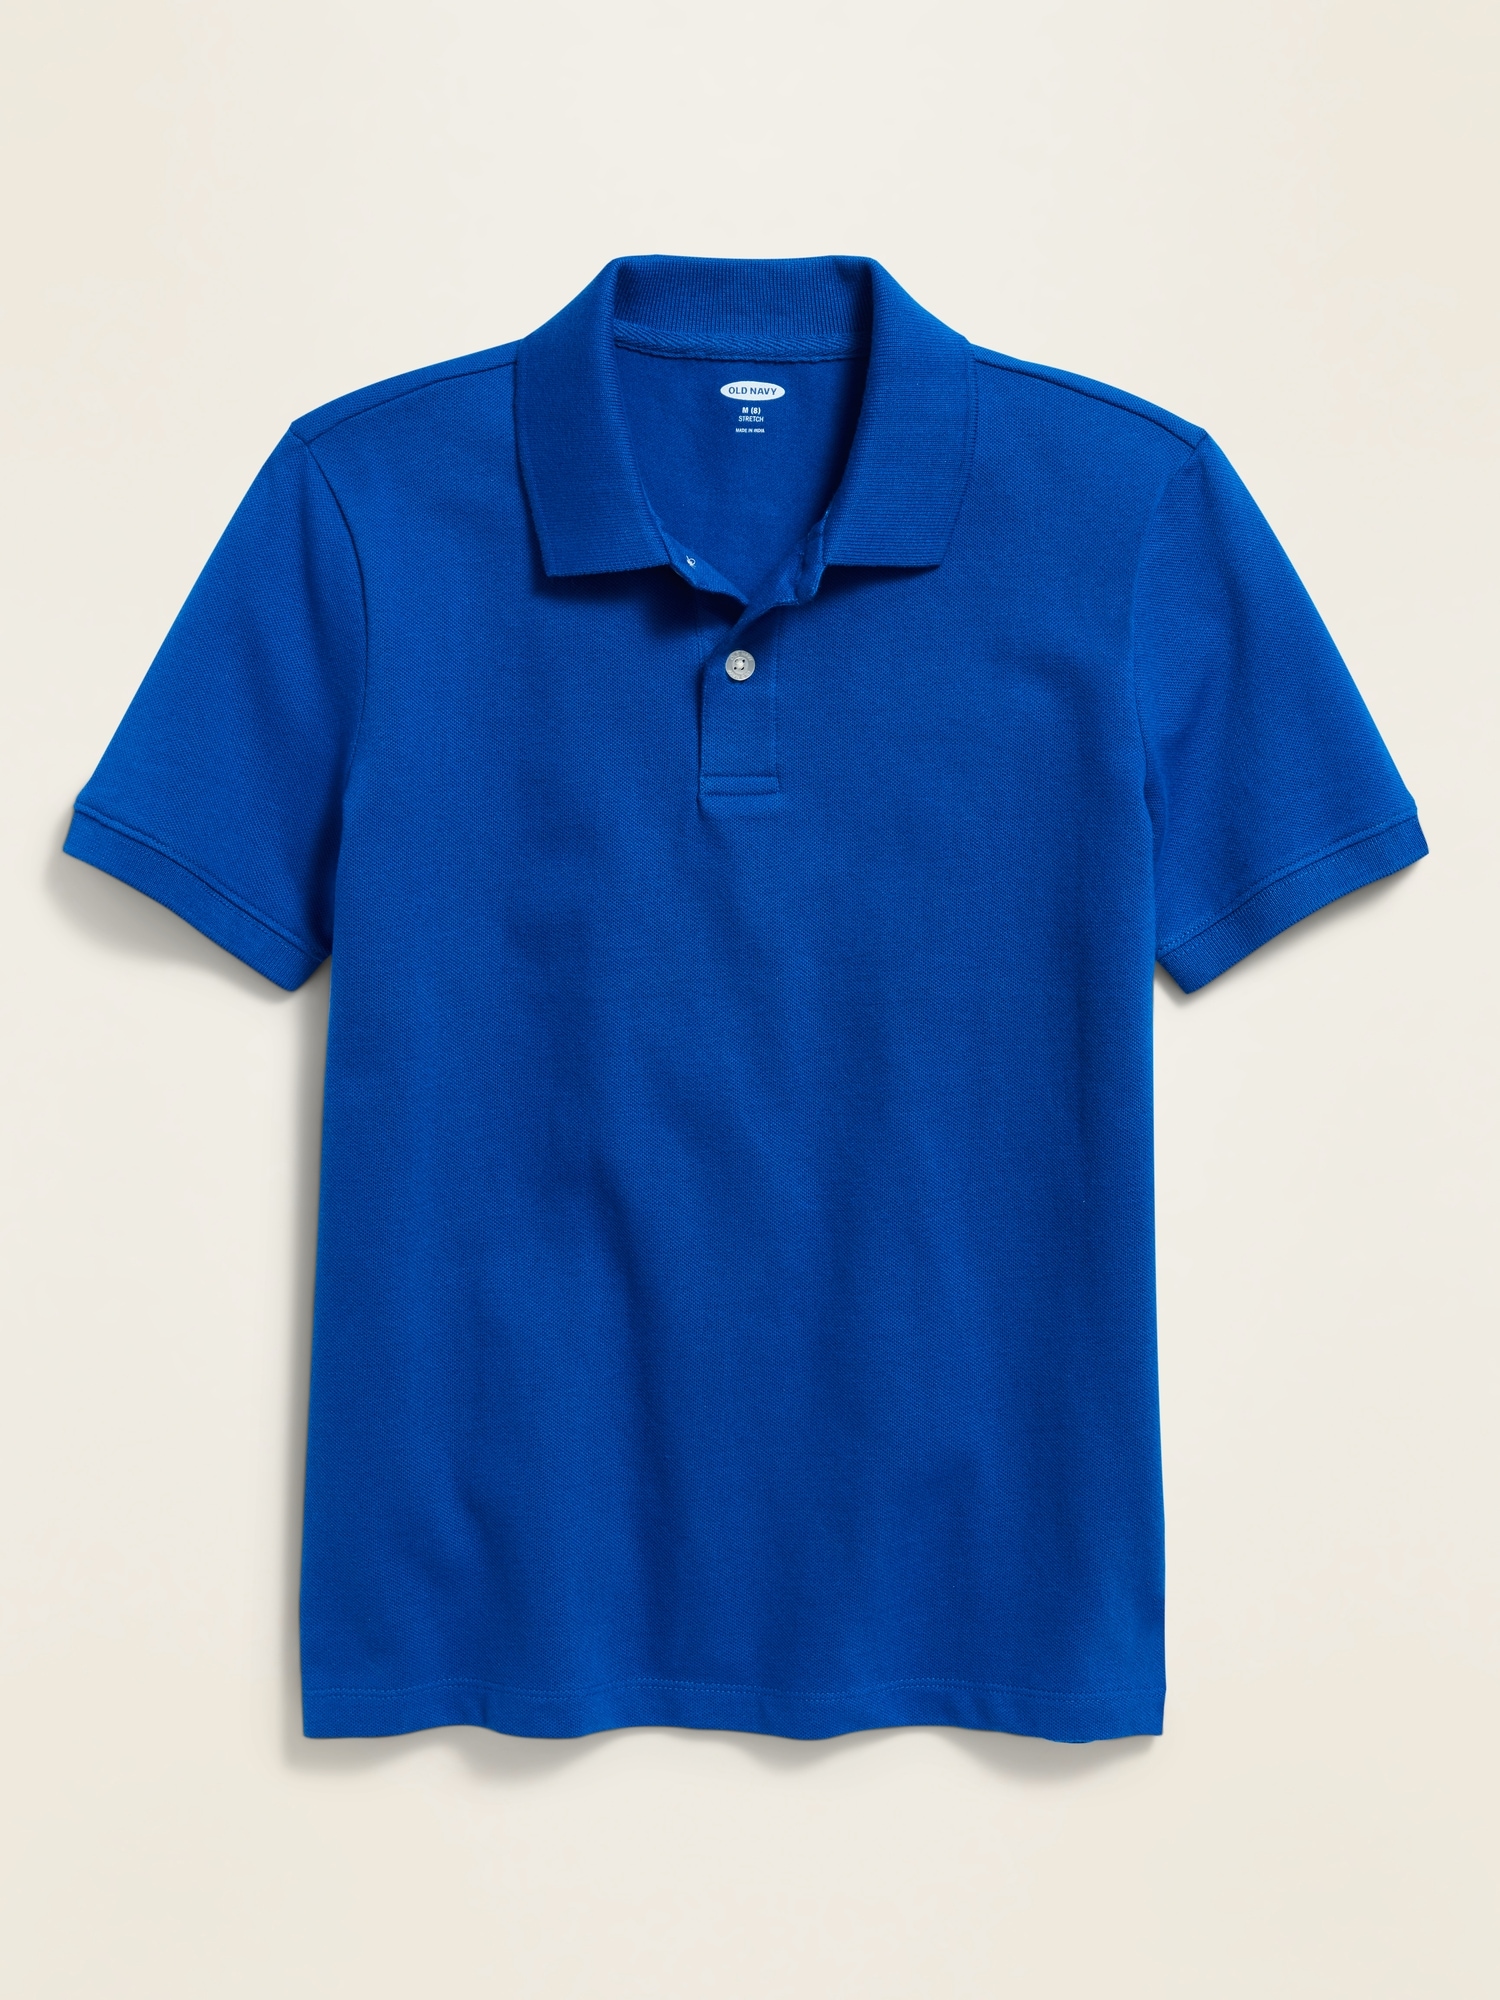 Old Navy School Uniform Built-In Flex Polo Shirt for Boys blue. 1